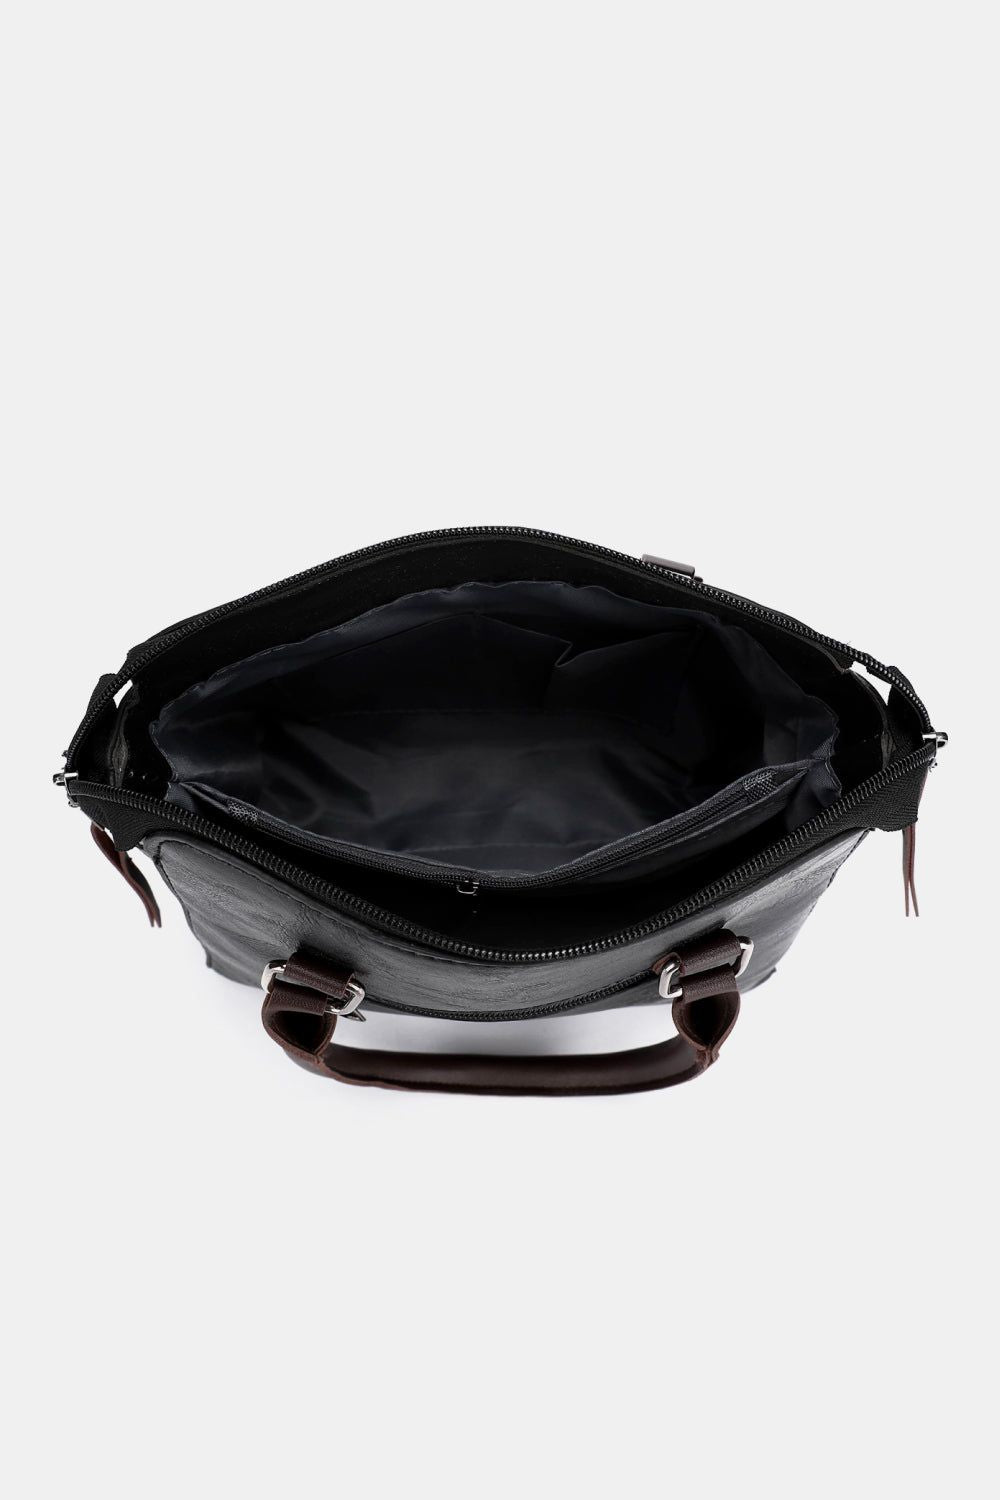 4-Piece PU Leather Bag Set - By Baano